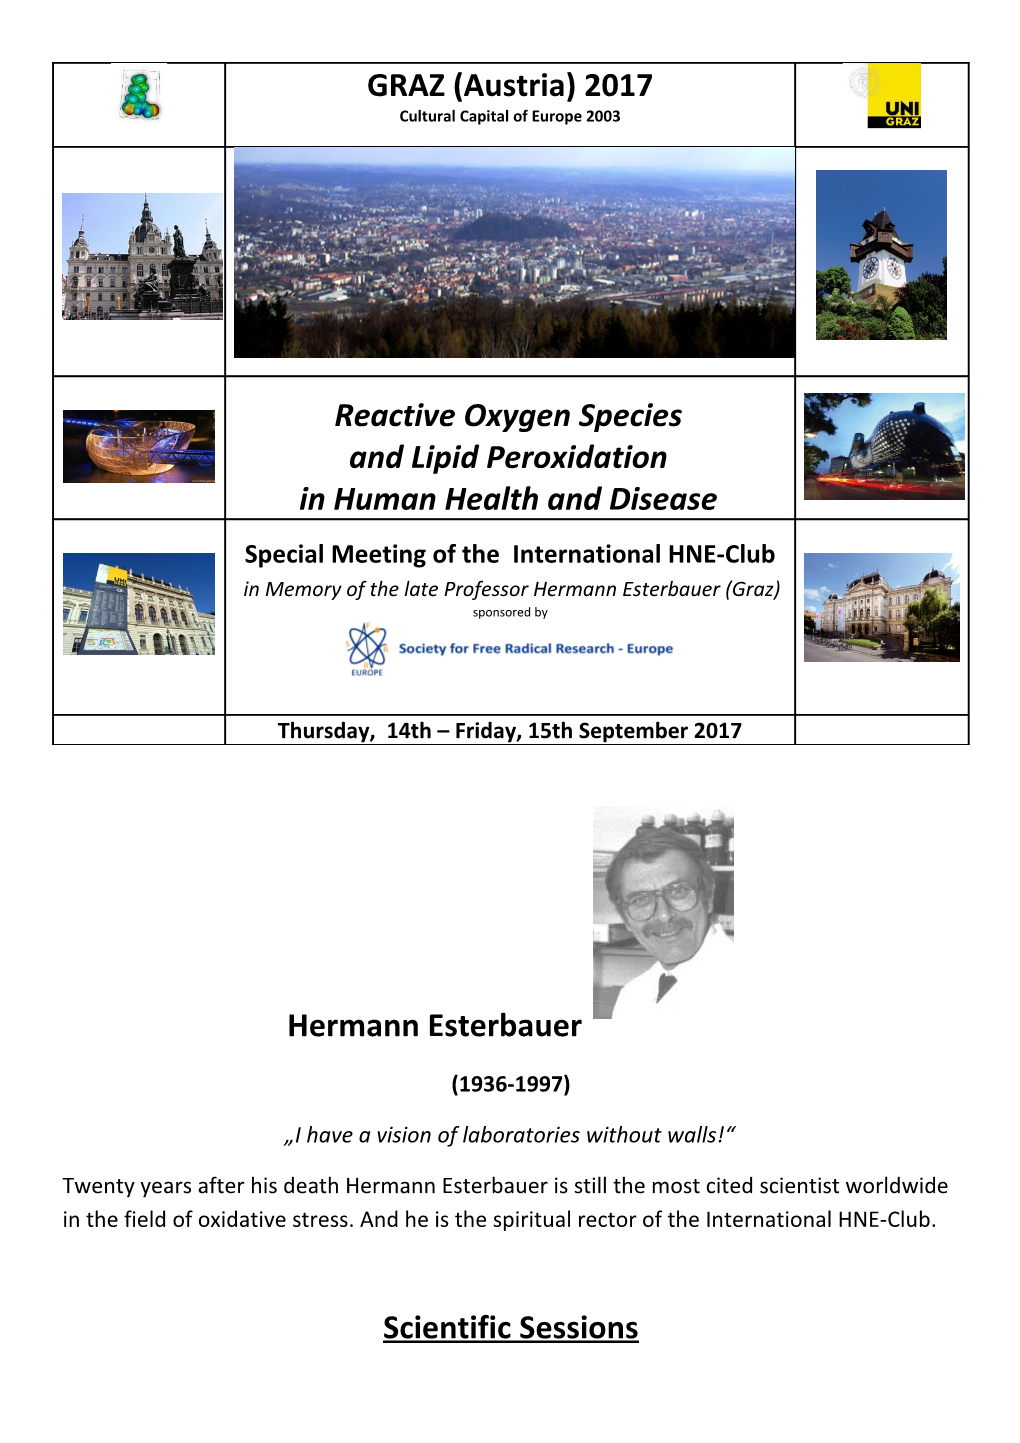 0. Memorial Session for Hermann Esterbauer